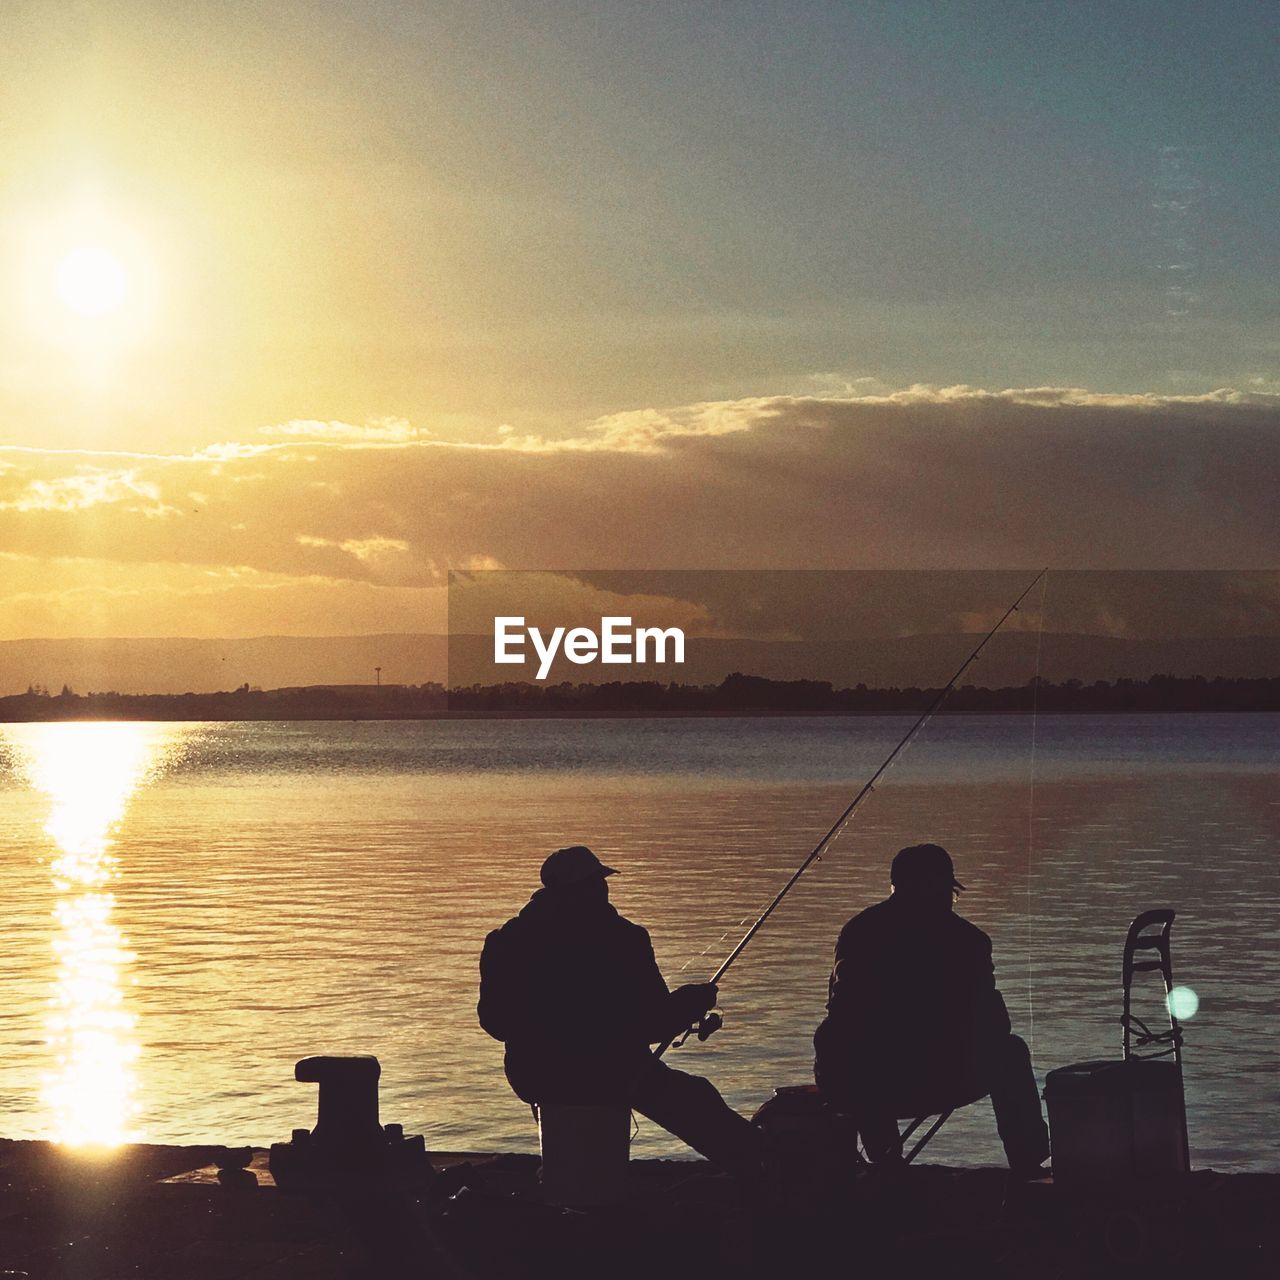 SILHOUETTE MEN FISHING AT SEA AGAINST SUNSET SKY